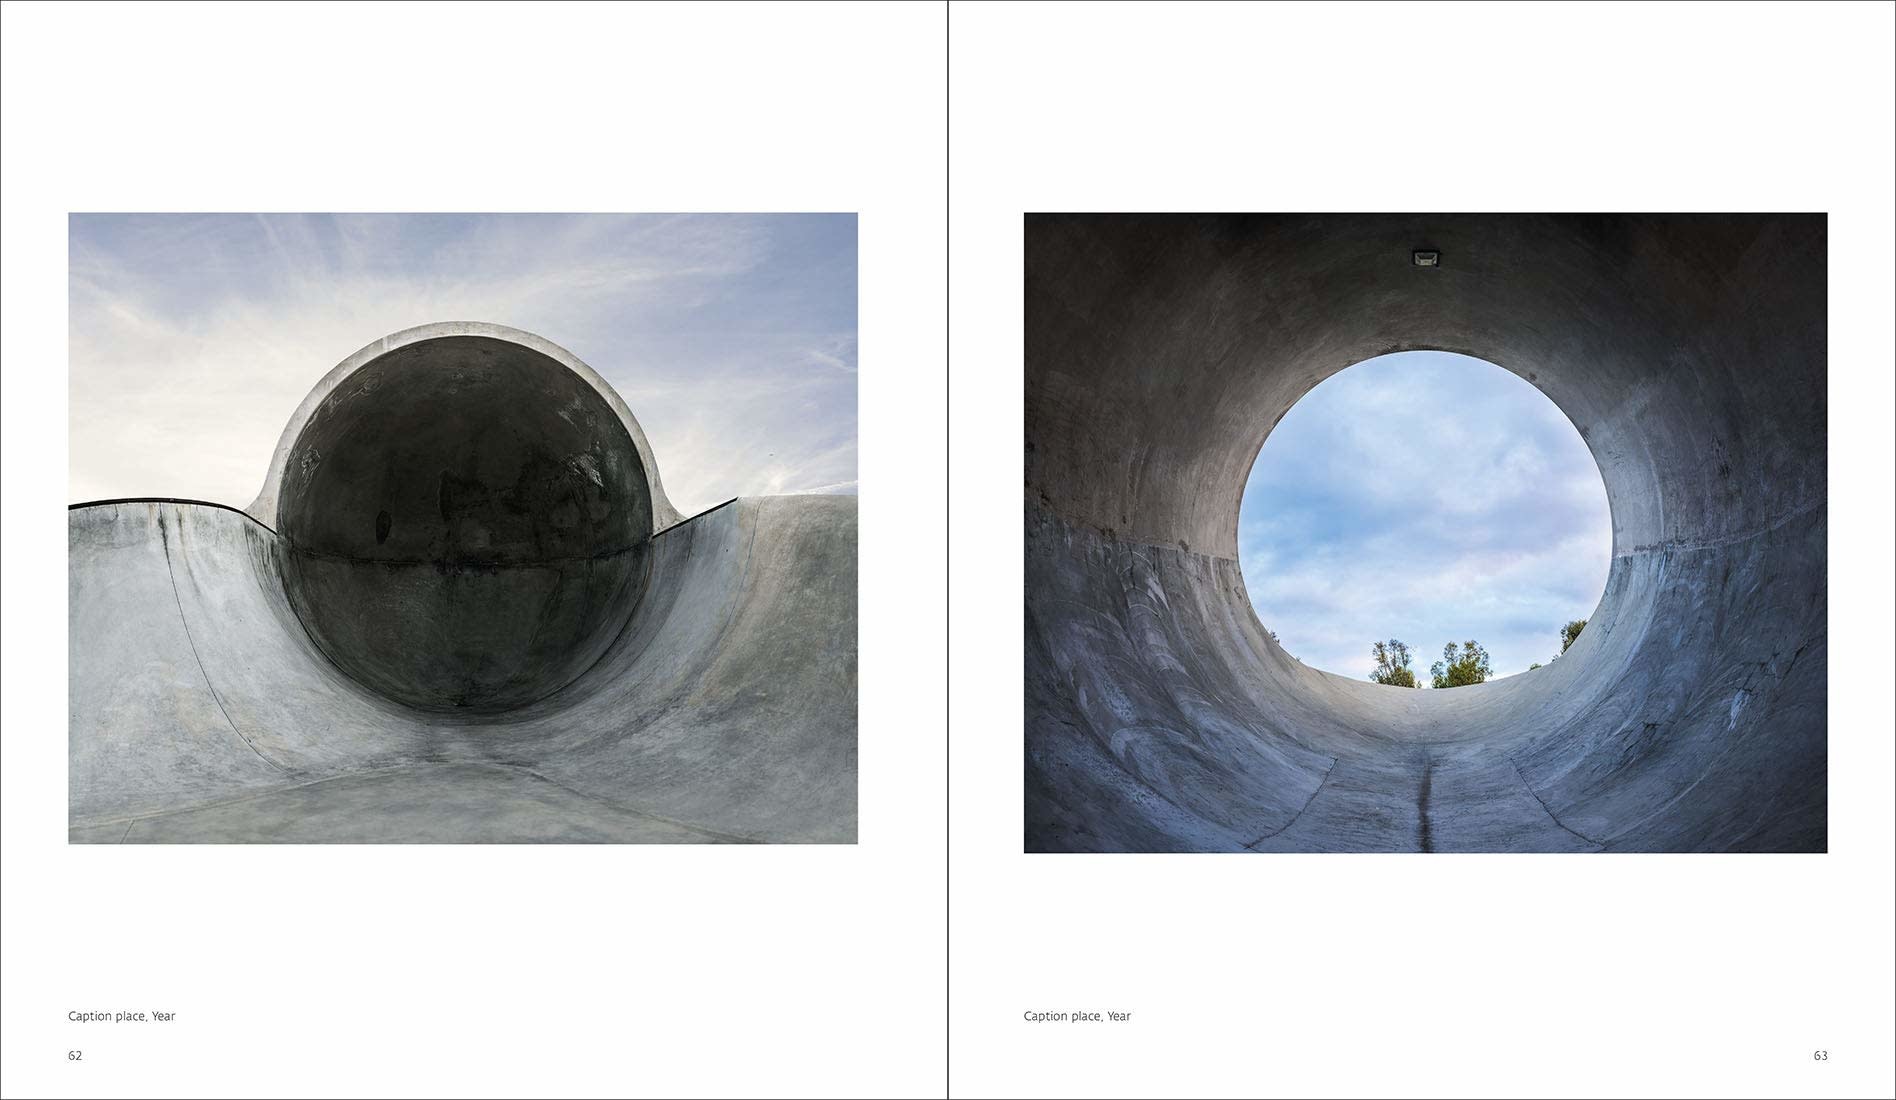 Amir Zaki California Concrete A Landscape of Skateparks by Amir Zaki